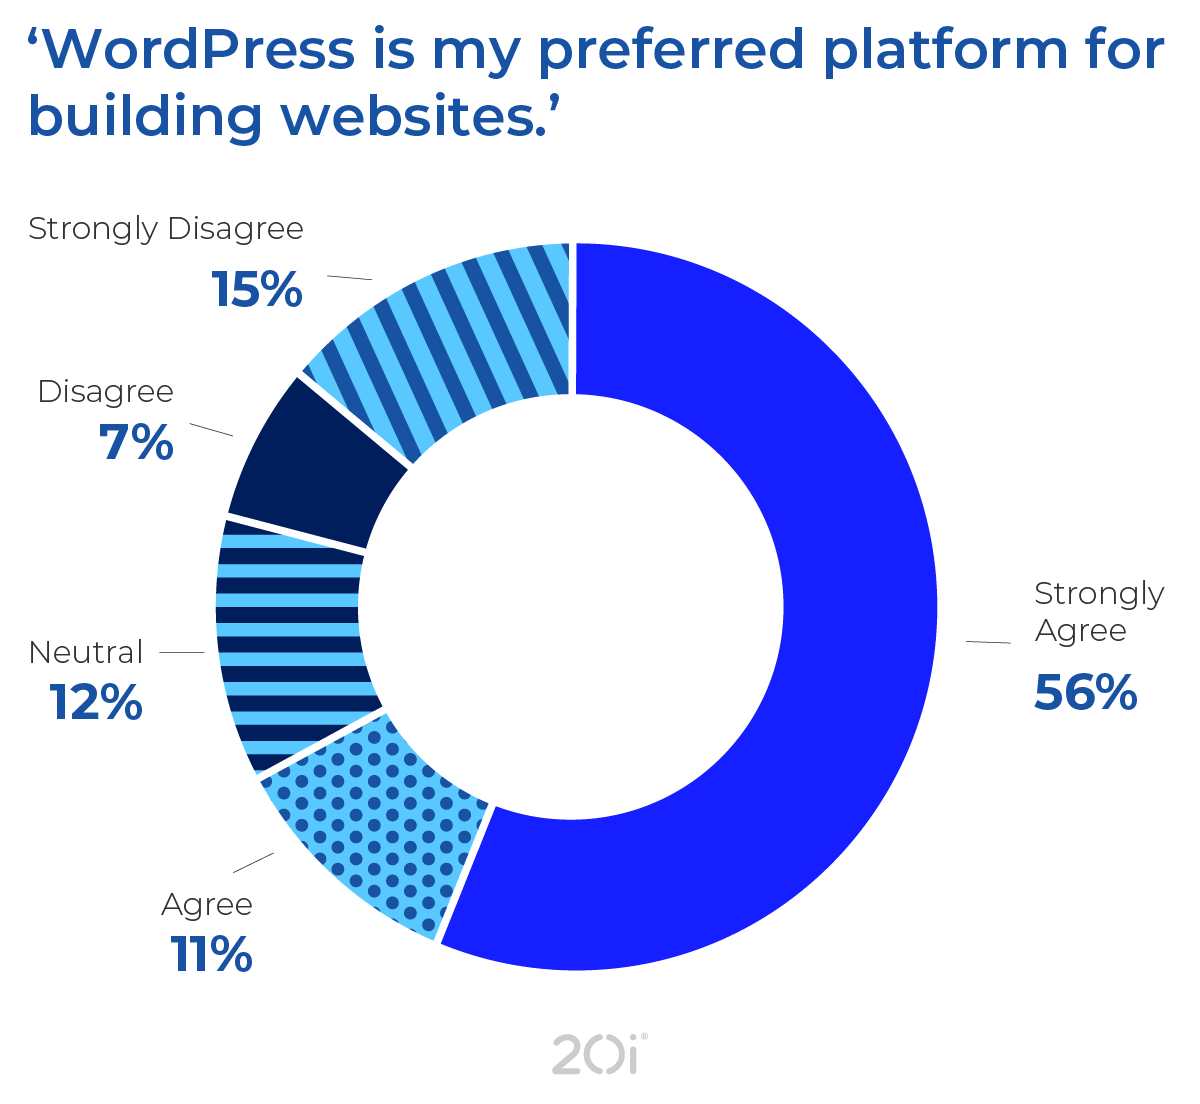 Web designer stat: 67% say that WordPress is their preferred platform